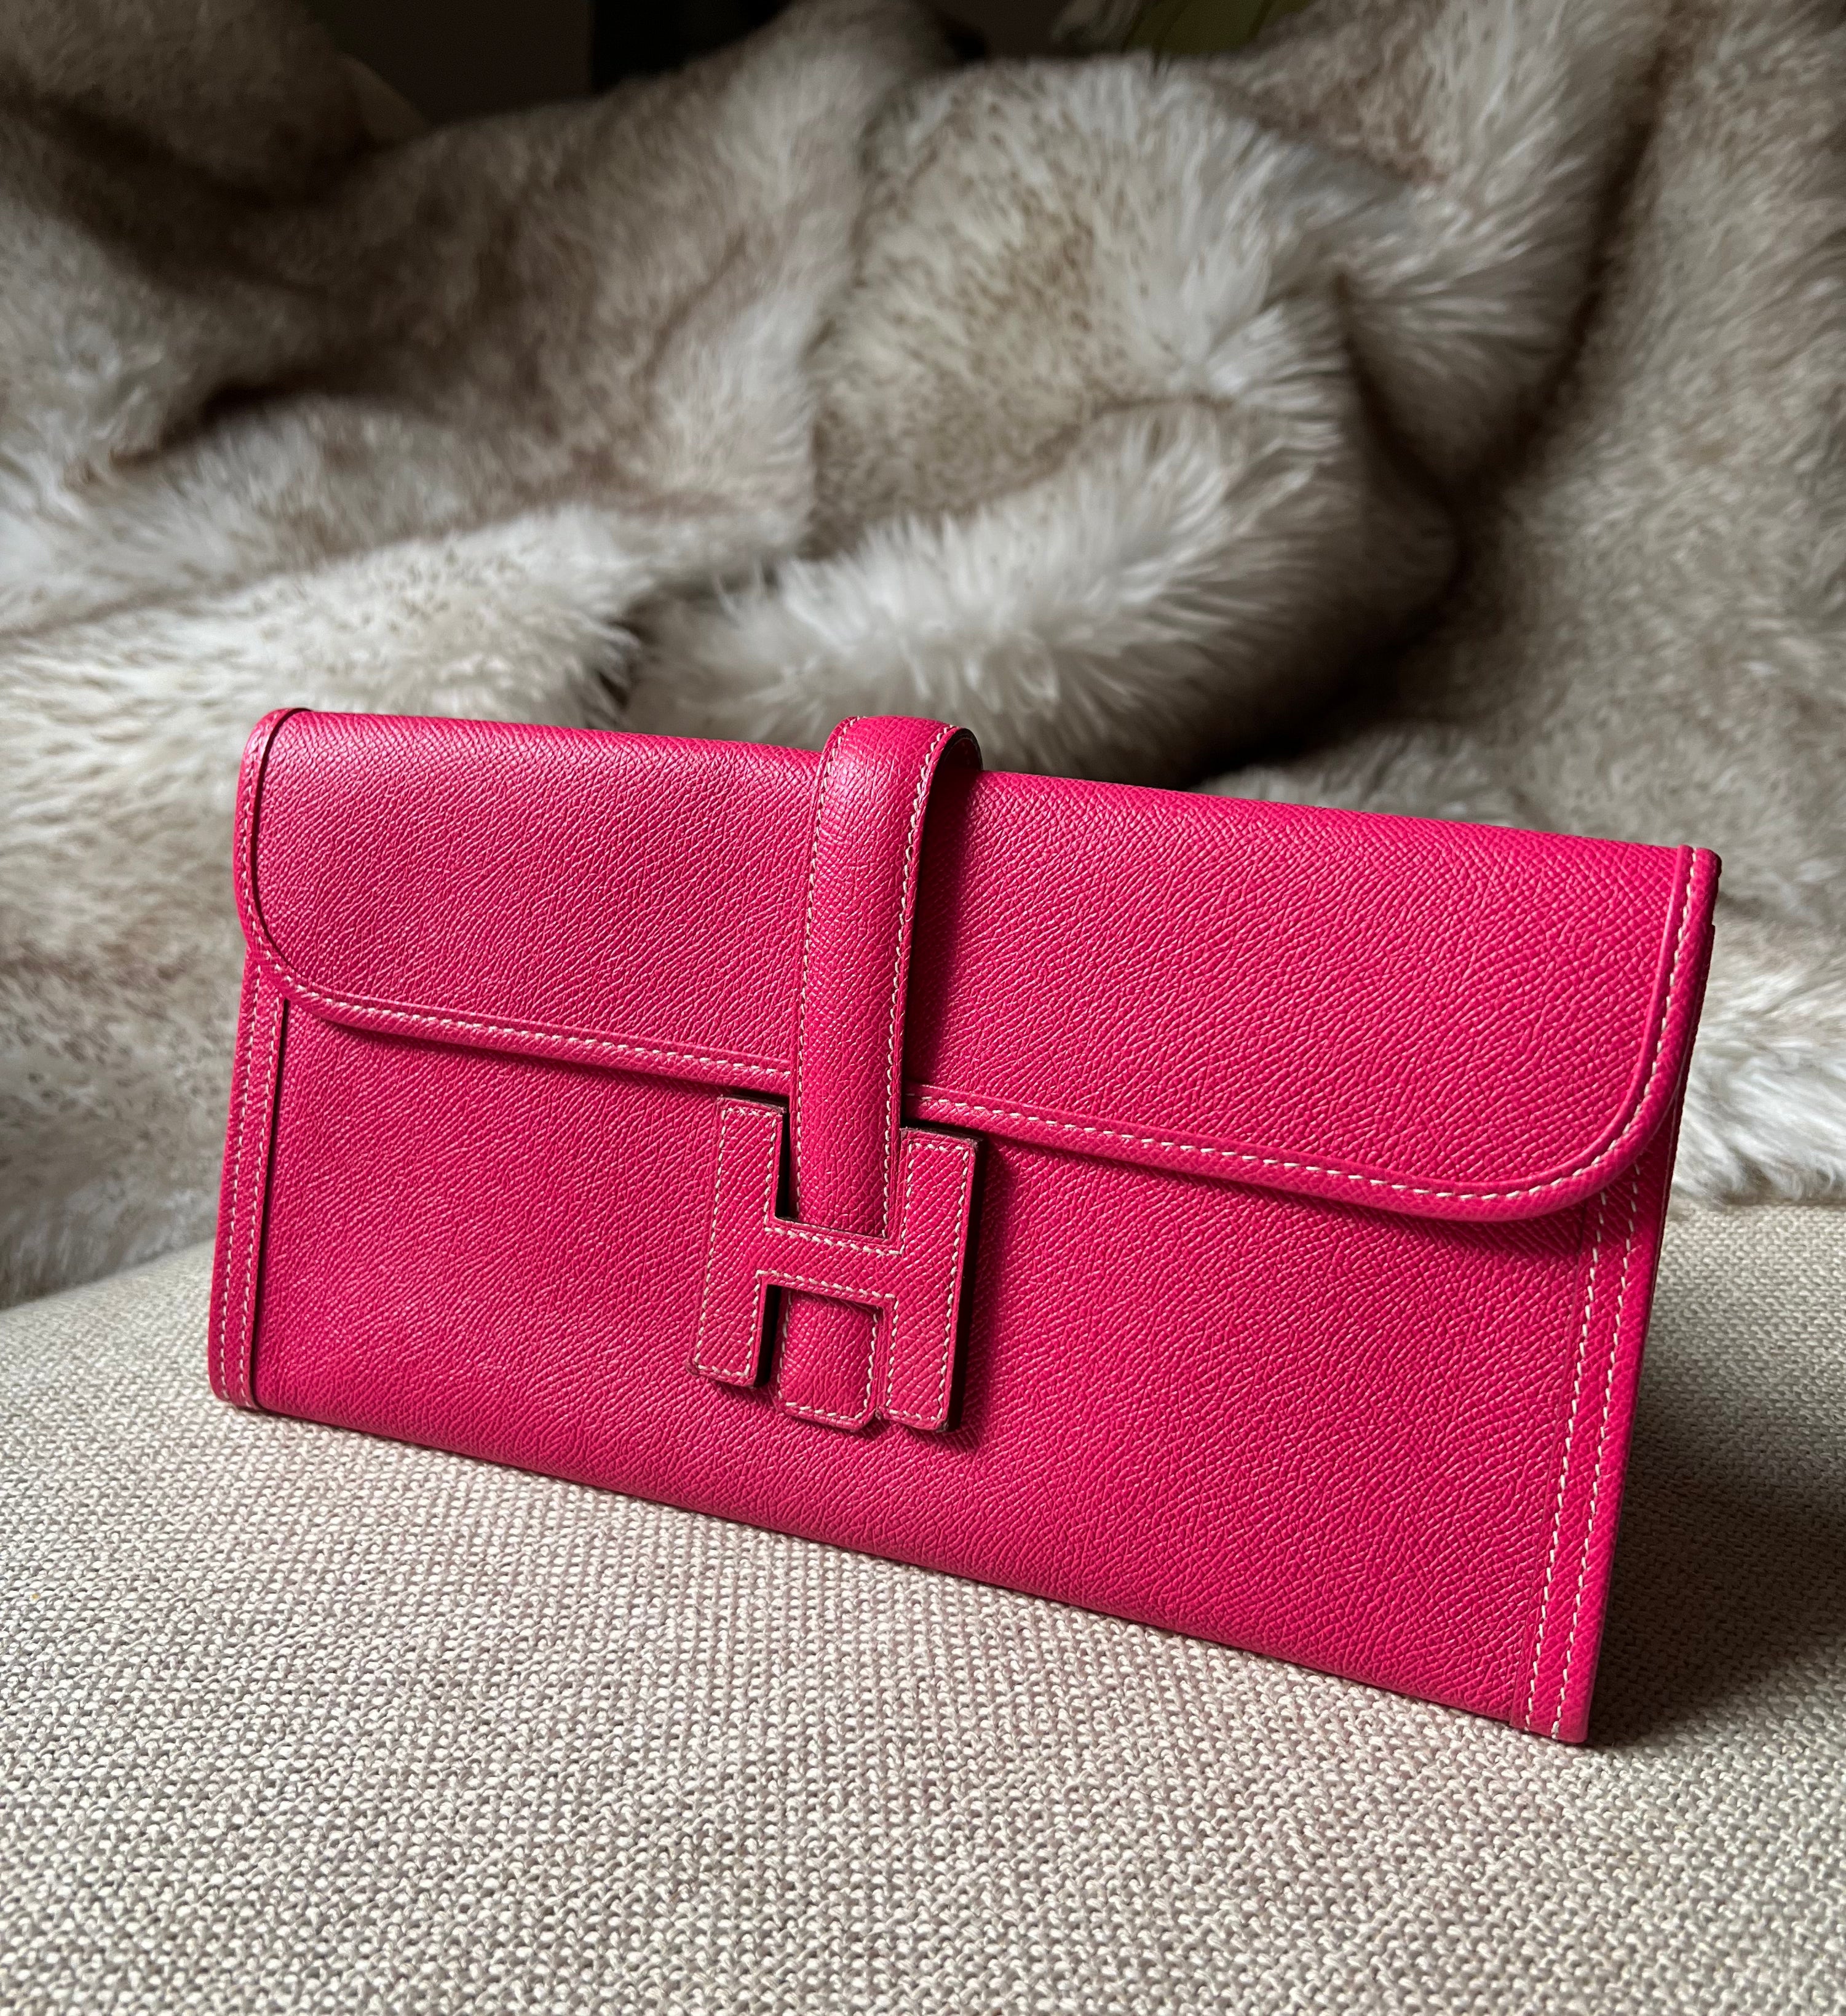 Hermès Jige Clutch 29 Bag Rose Tyrien - Epsom Leather